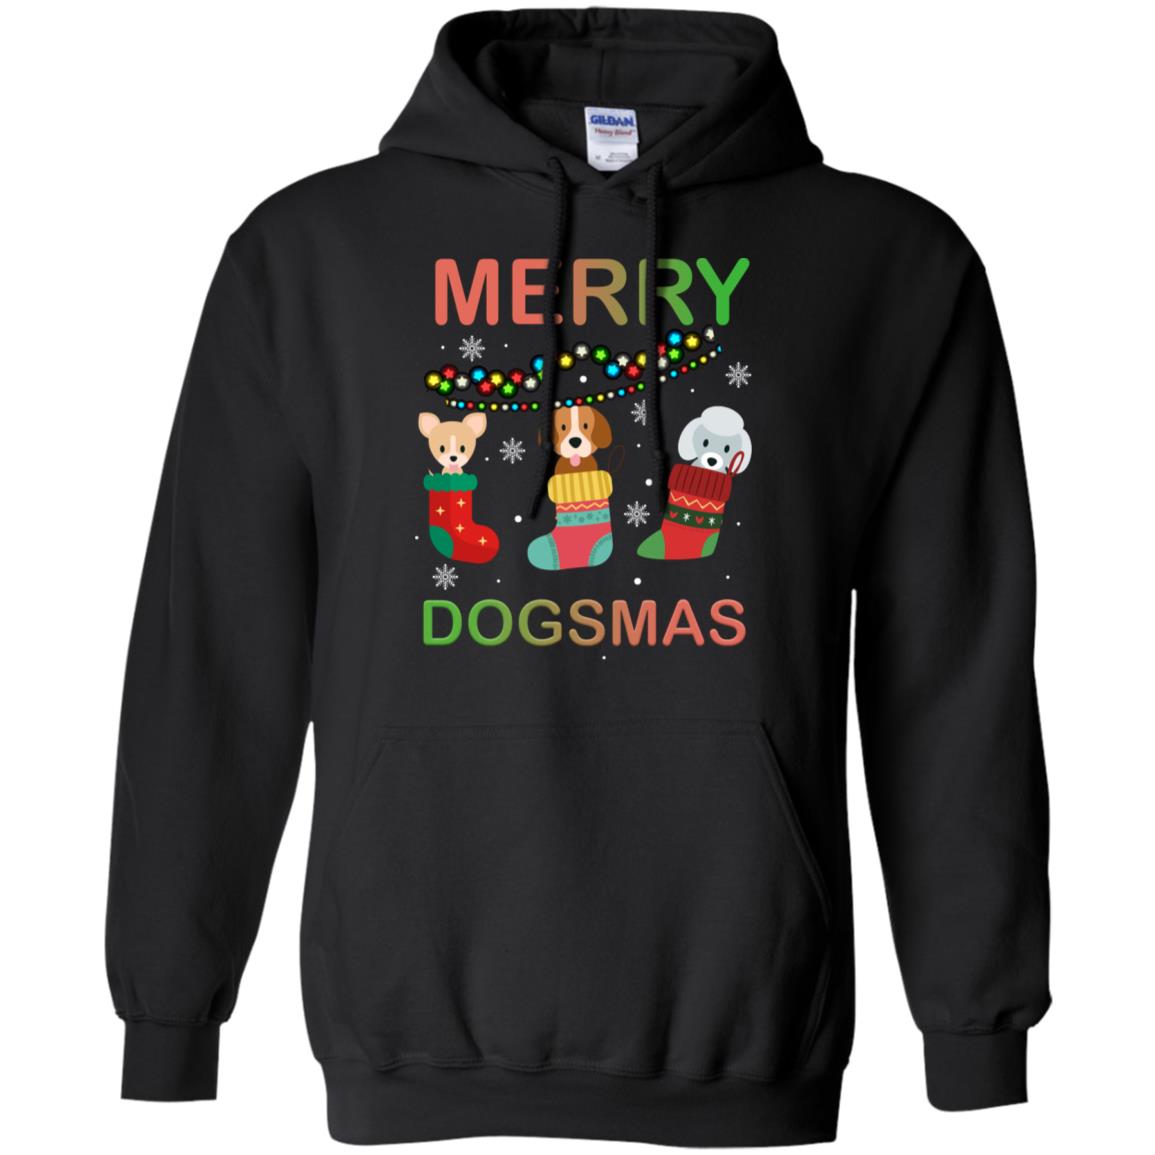 Merry Dogsmas X-mas Gift Shirt For Dogs LoversG185 Gildan Pullover Hoodie 8 oz.